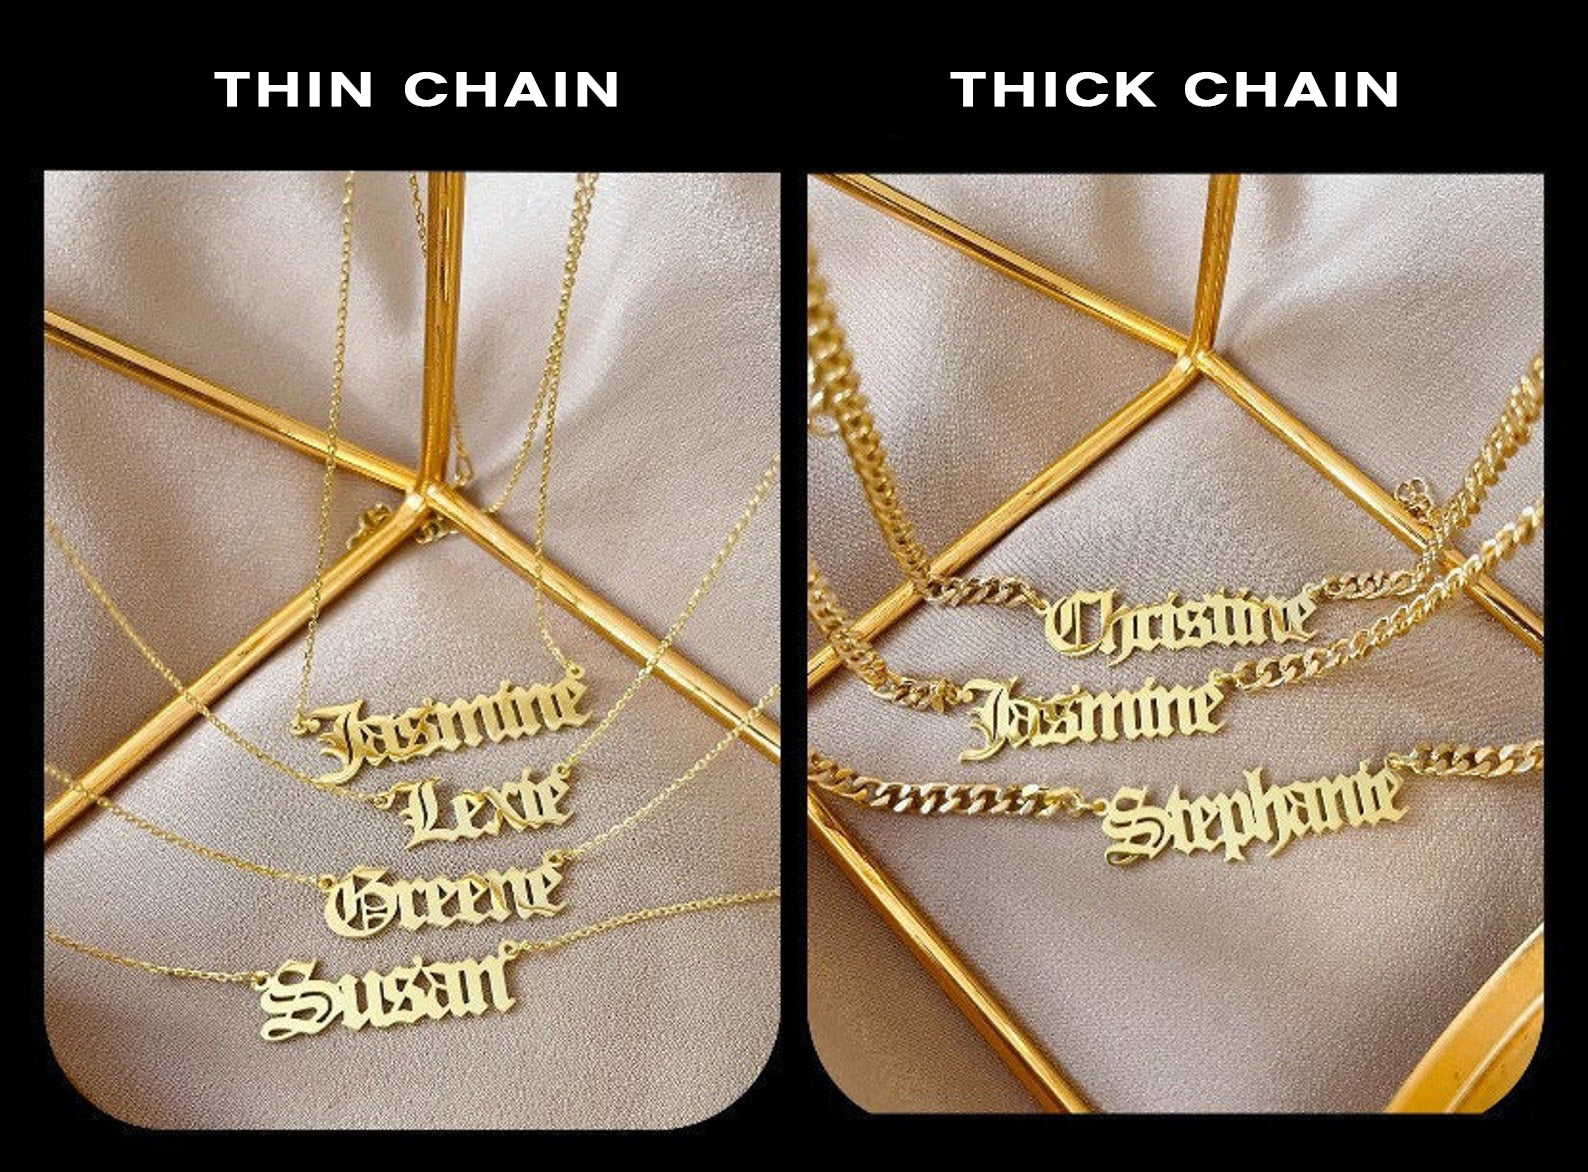 Custom Name Necklace - Old English